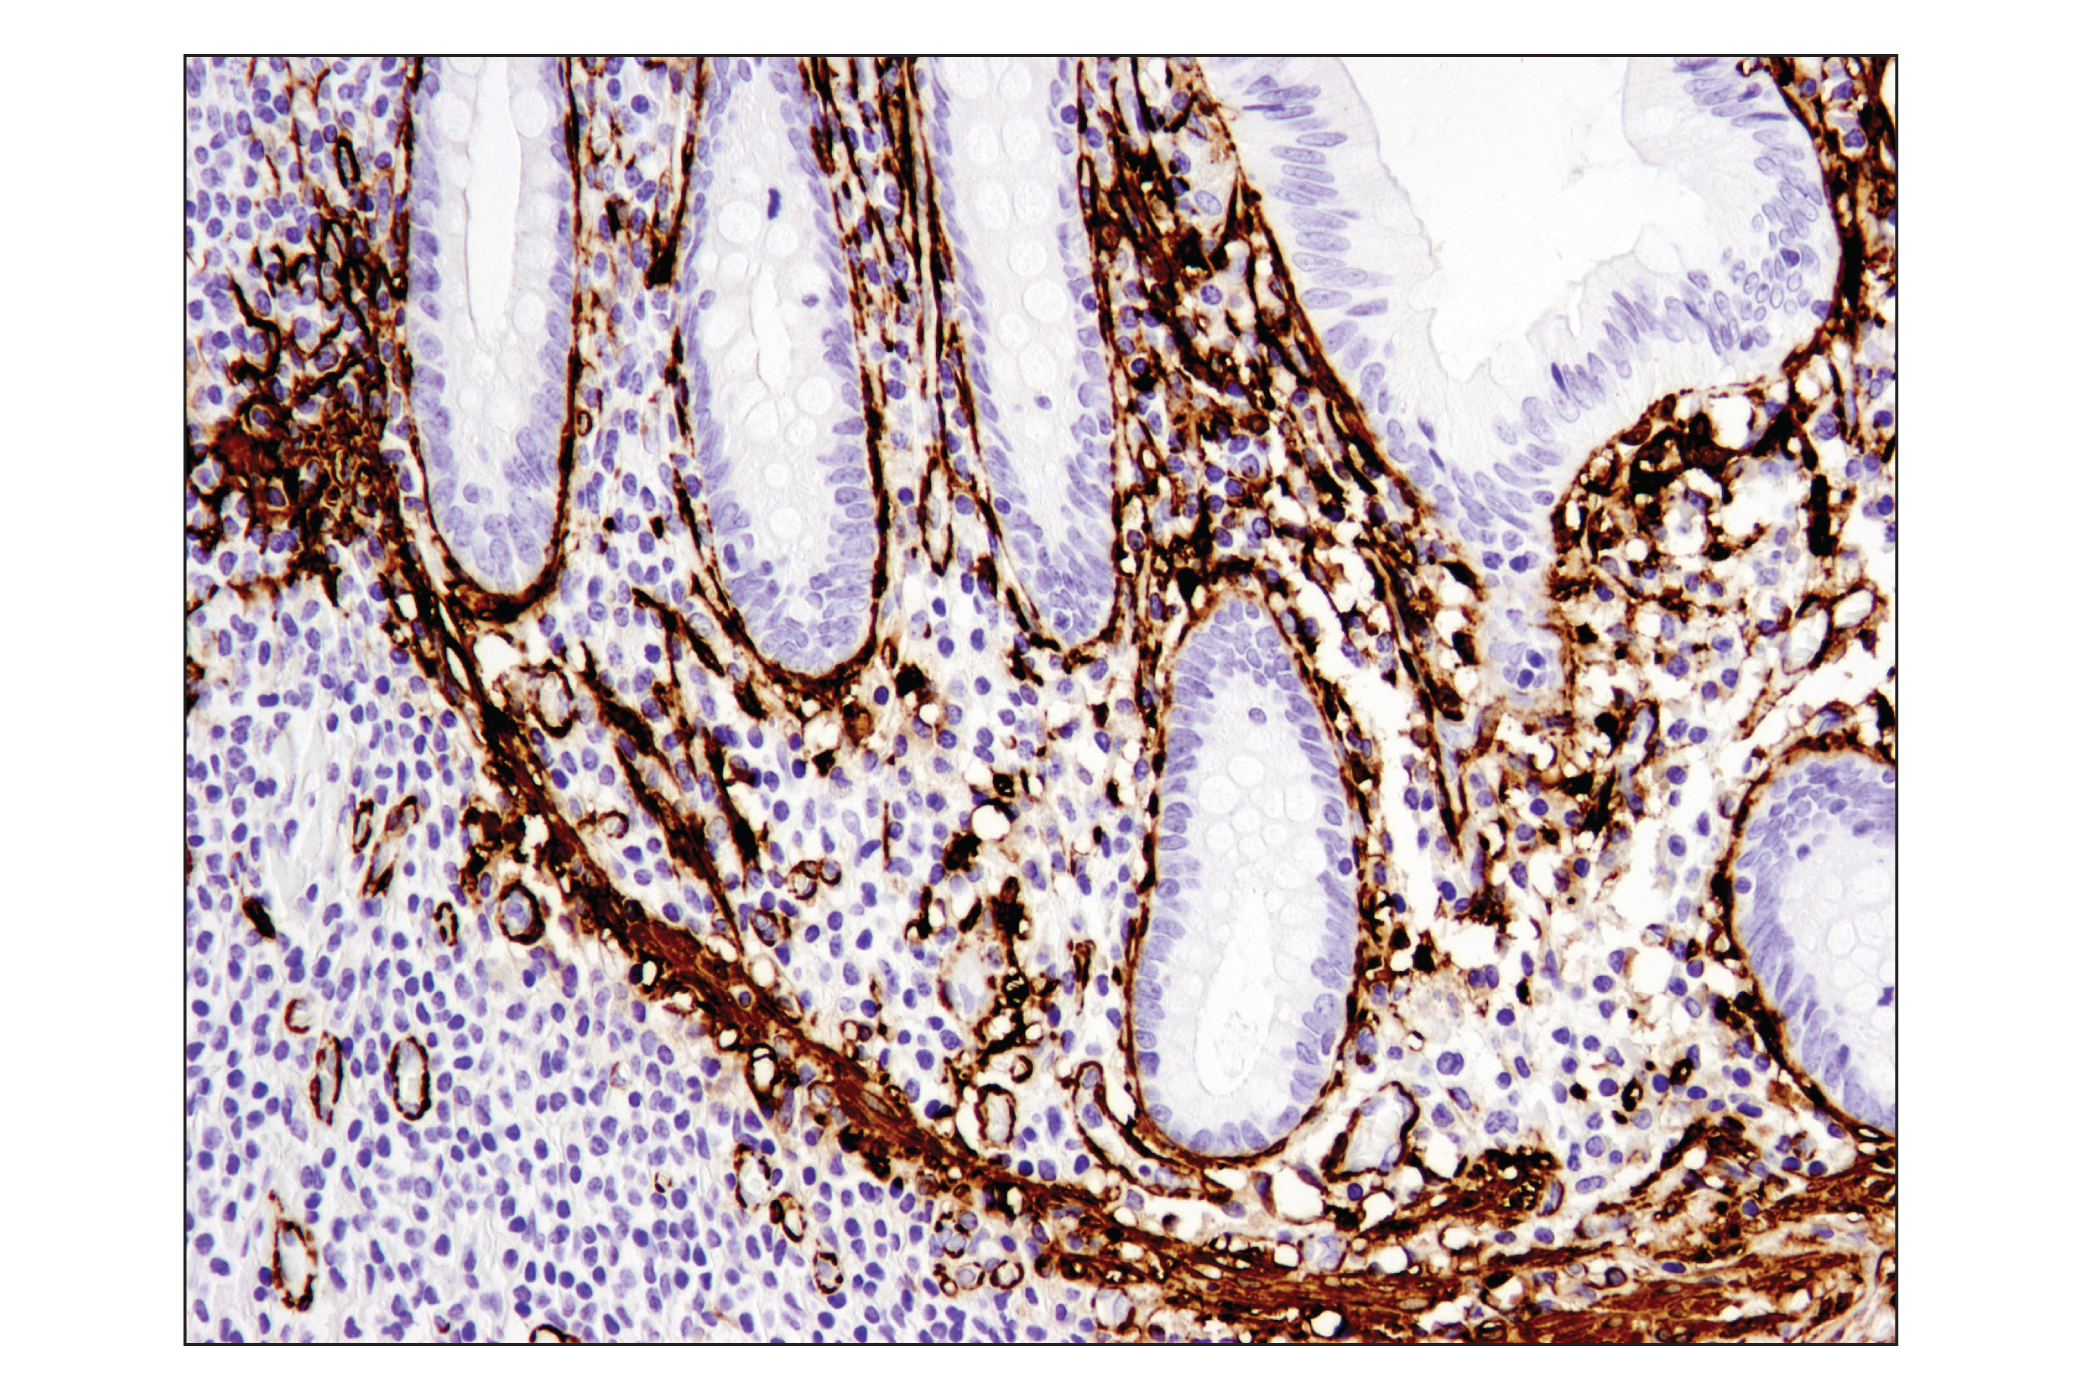  Image 22: Cancer Associated Fibroblast Marker Antibody Sampler Kit